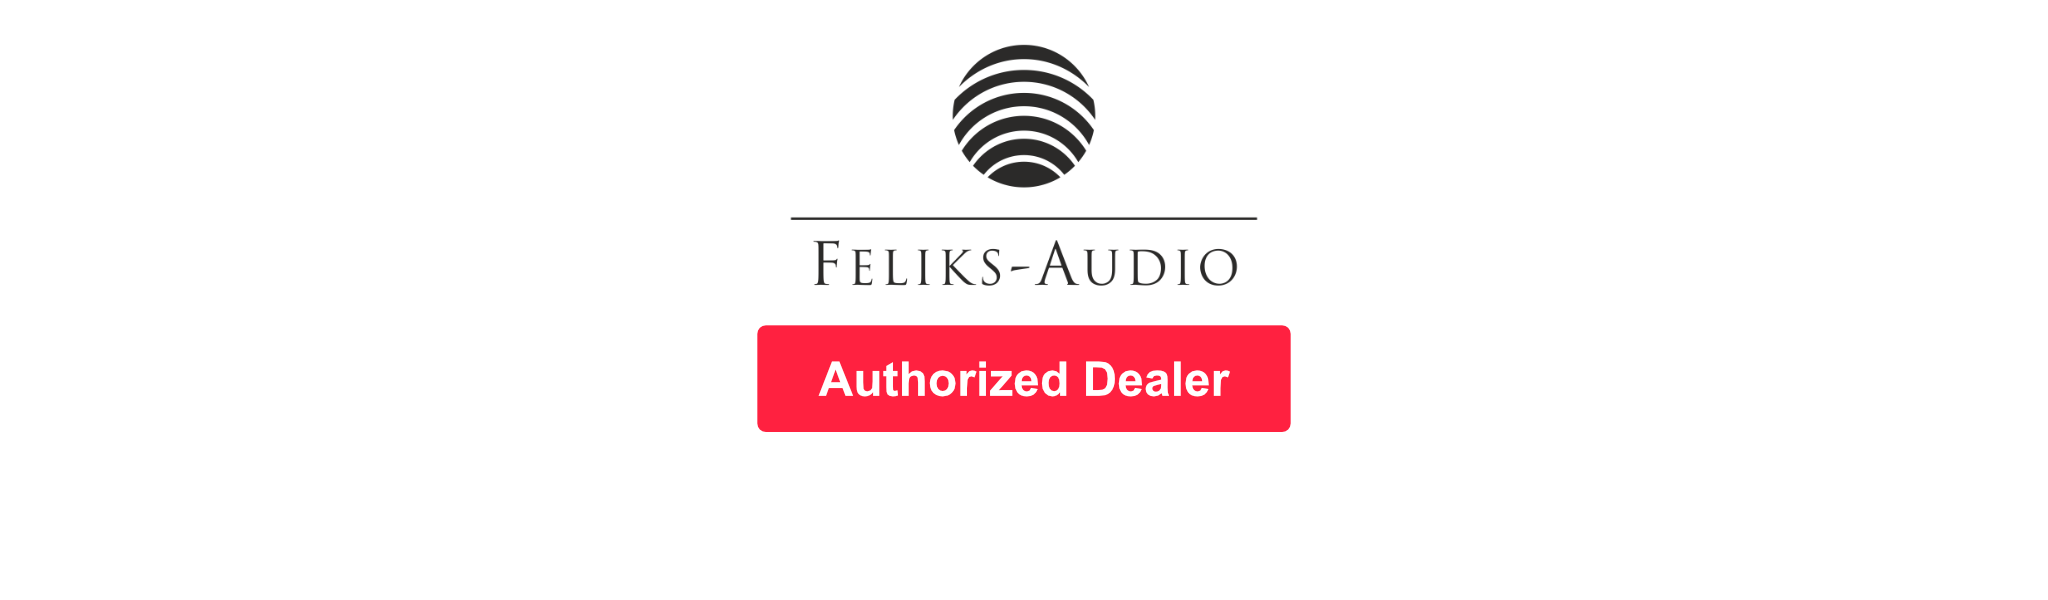 Felkis Audio